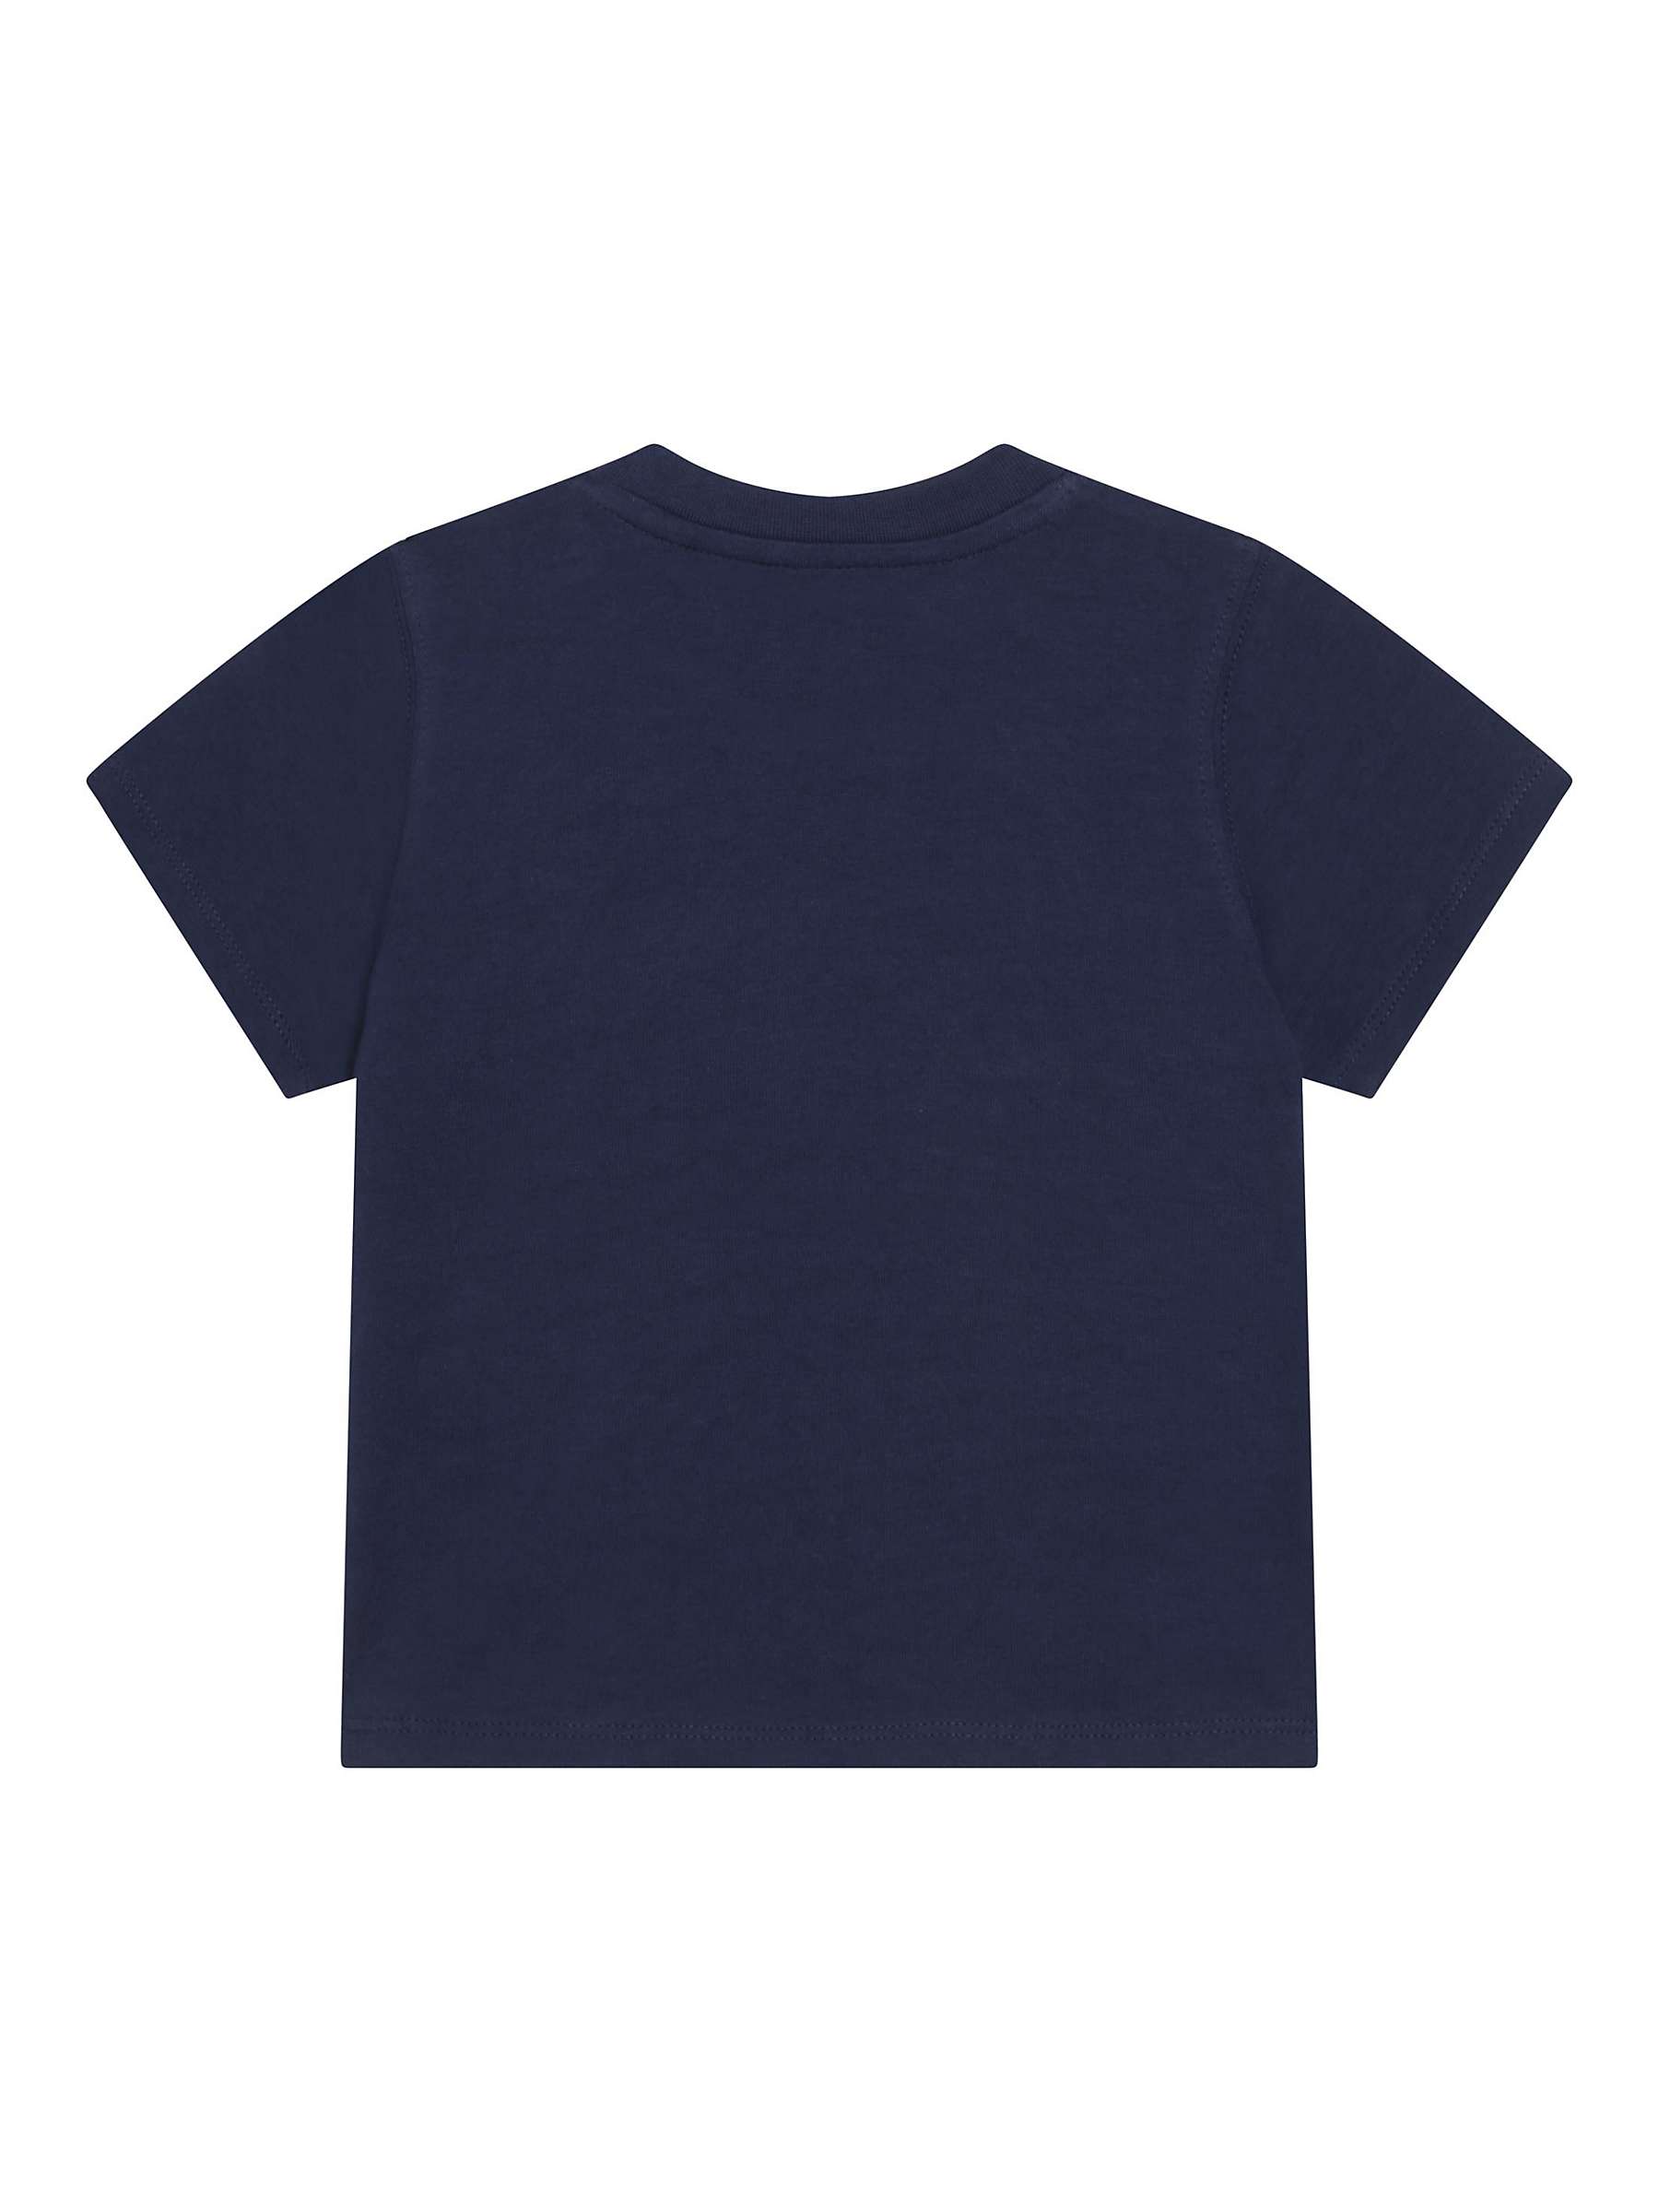 Buy Timberland Kids' Short Sleeved T-Shirt, Navy/Multi Online at johnlewis.com